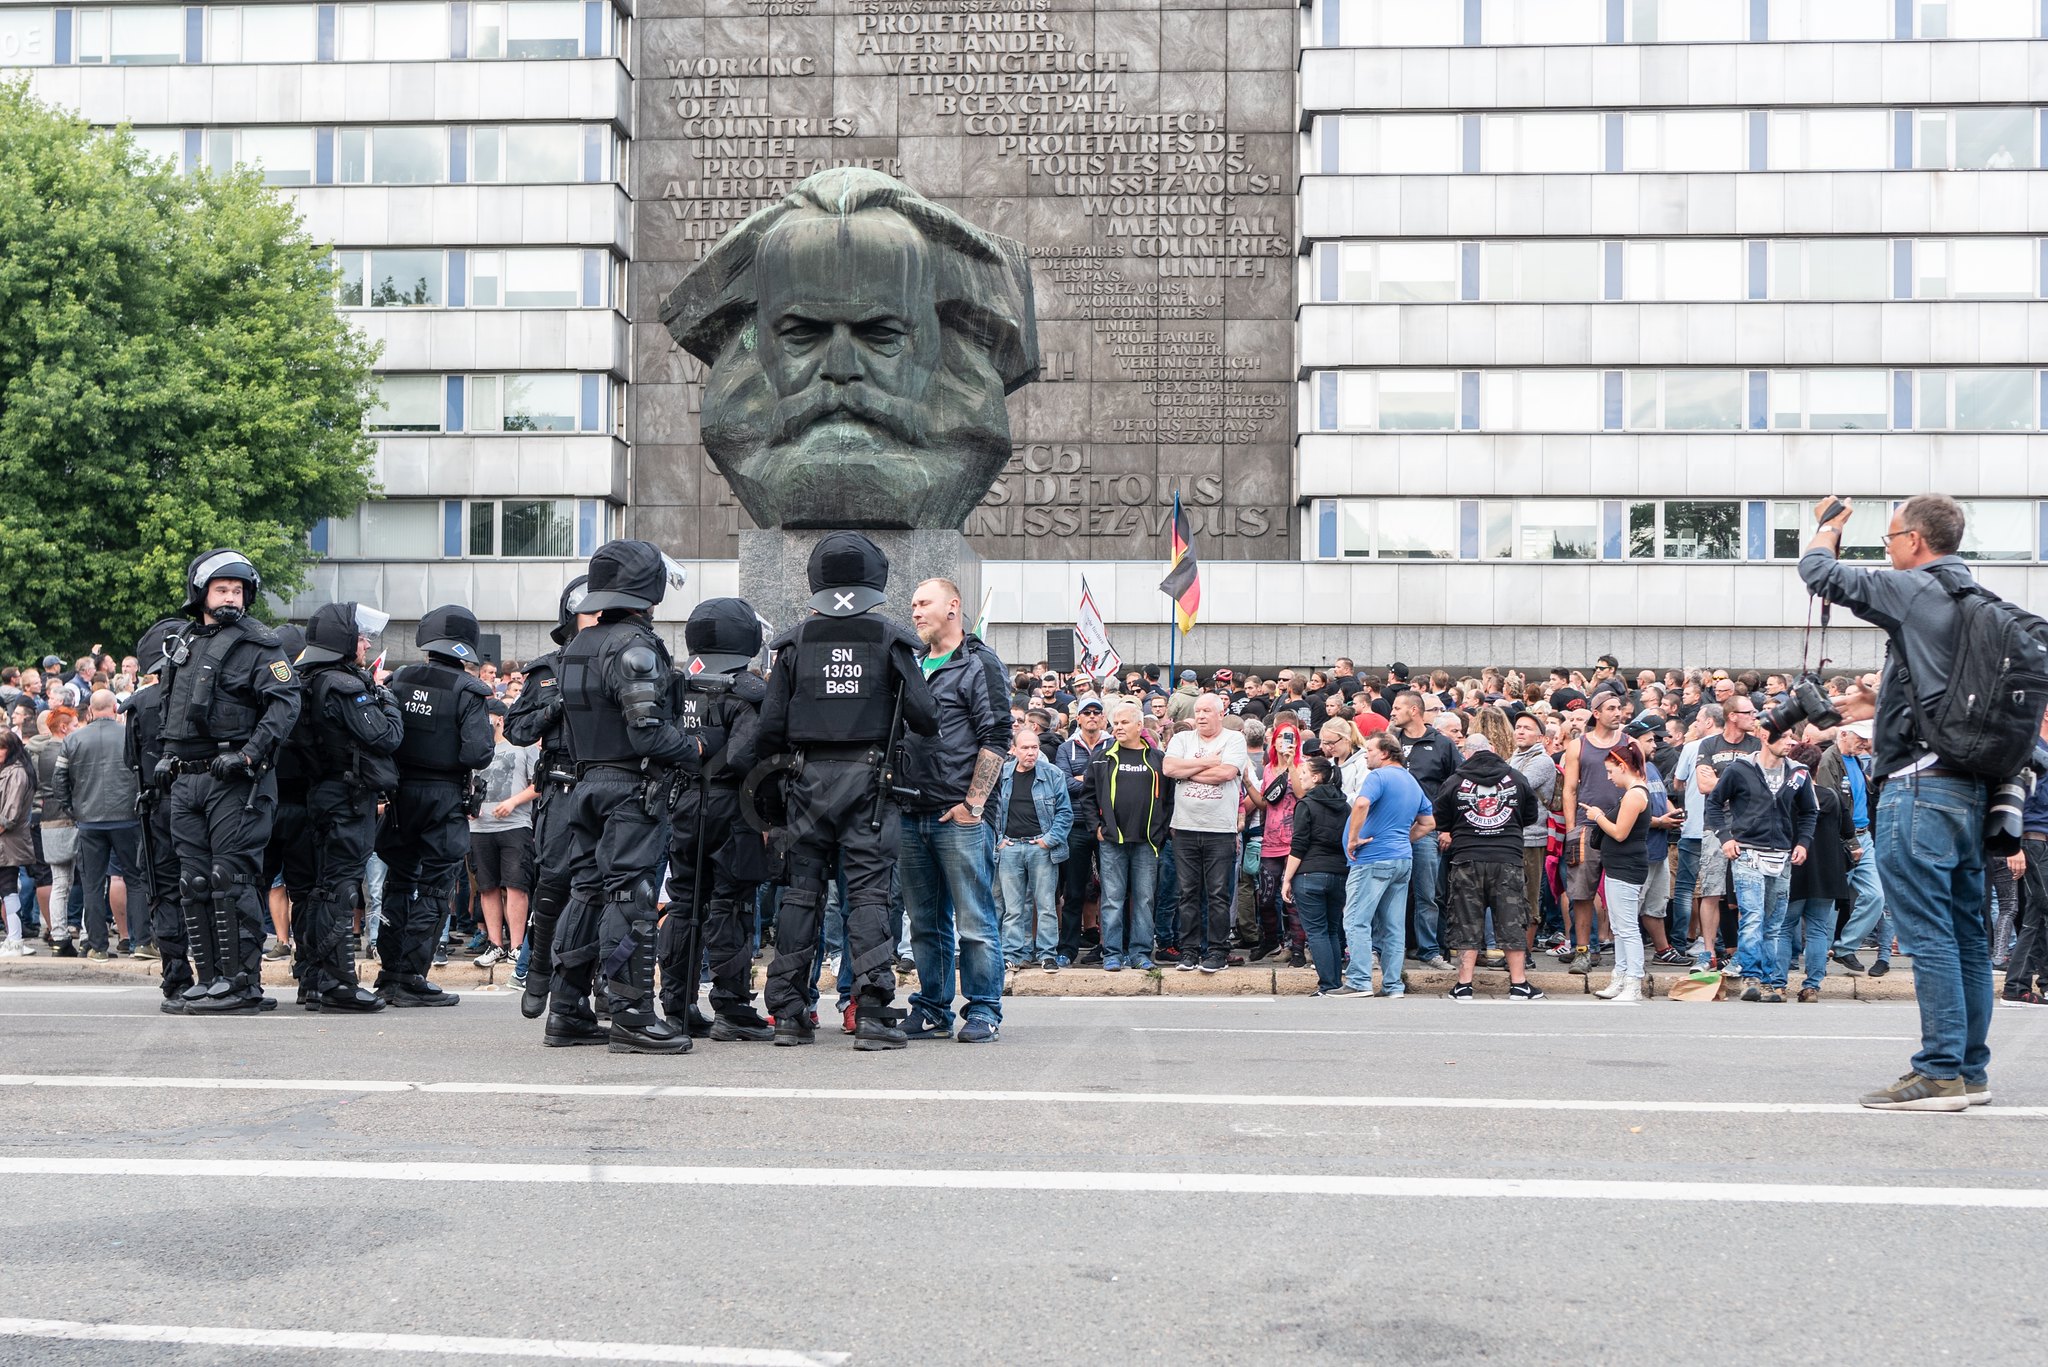 Rechte Demonstration in Chemnitz 2018, Bild: De Havilland/flickr